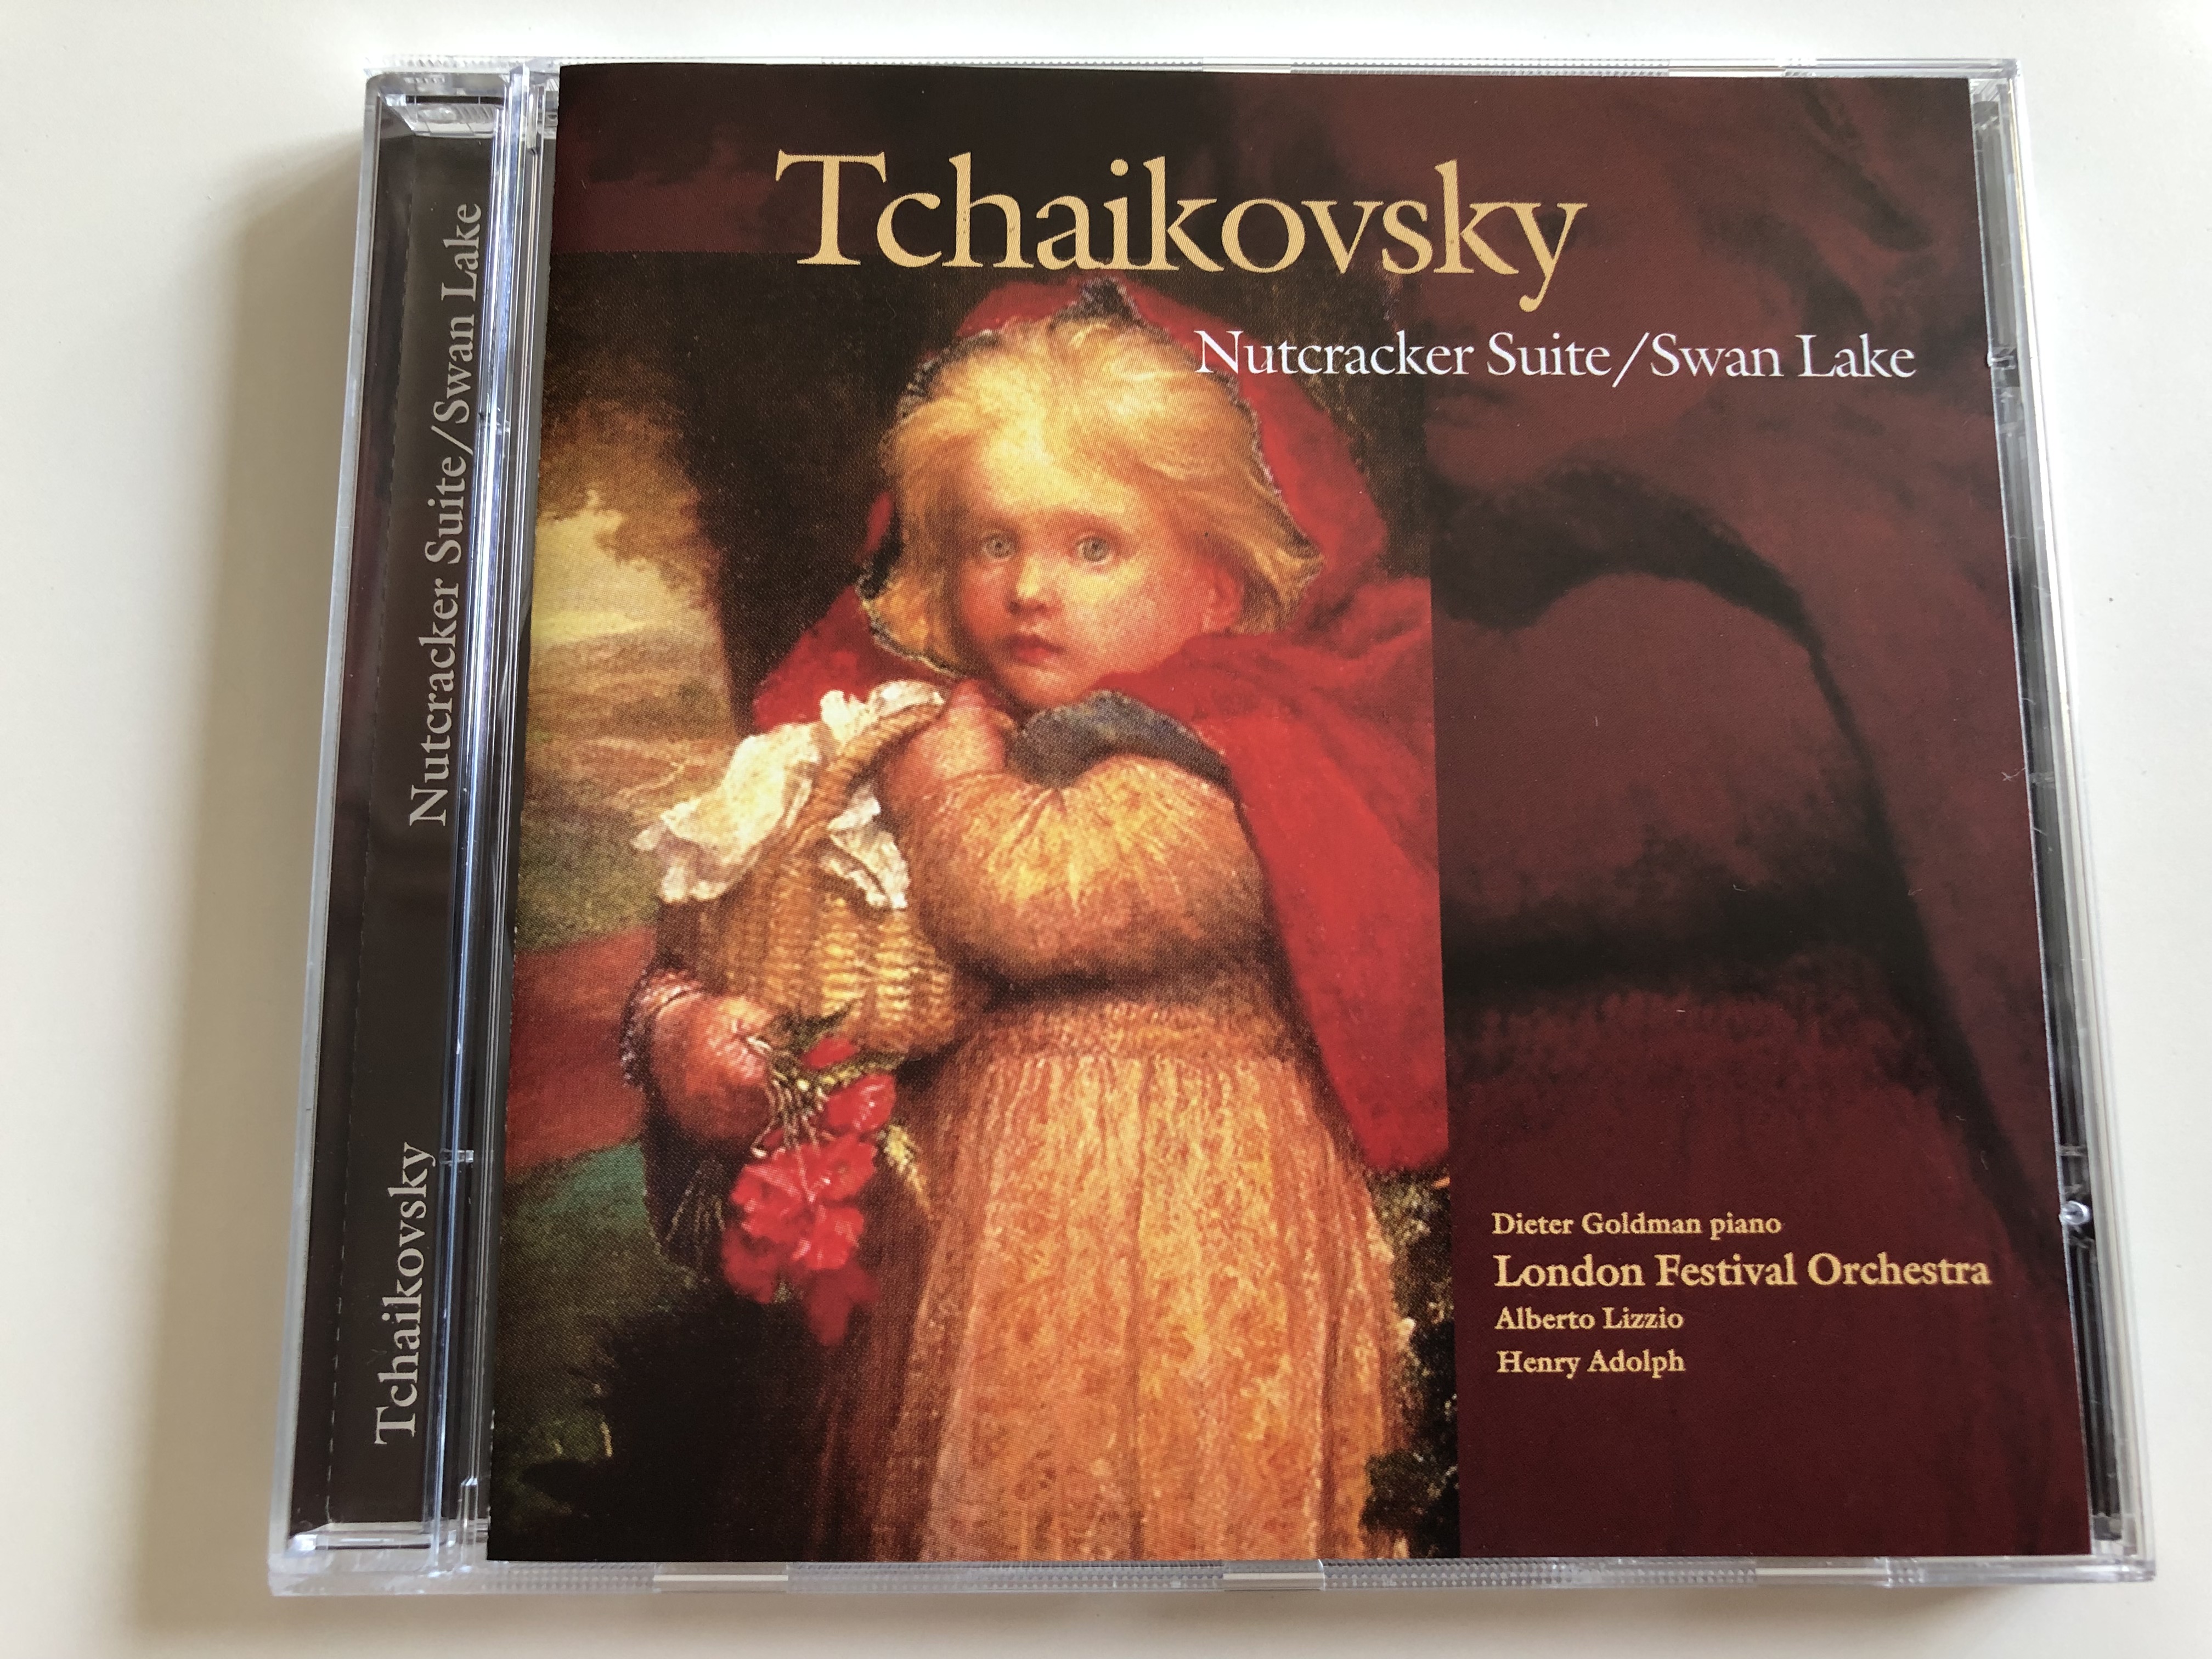 tchaikovsky-nutcracker-suite-swan-lake-dieter-goldman-piano-london-festival-orchestra-alberto-lizzio-henry-adolph-audio-cd-1998-1-.jpg